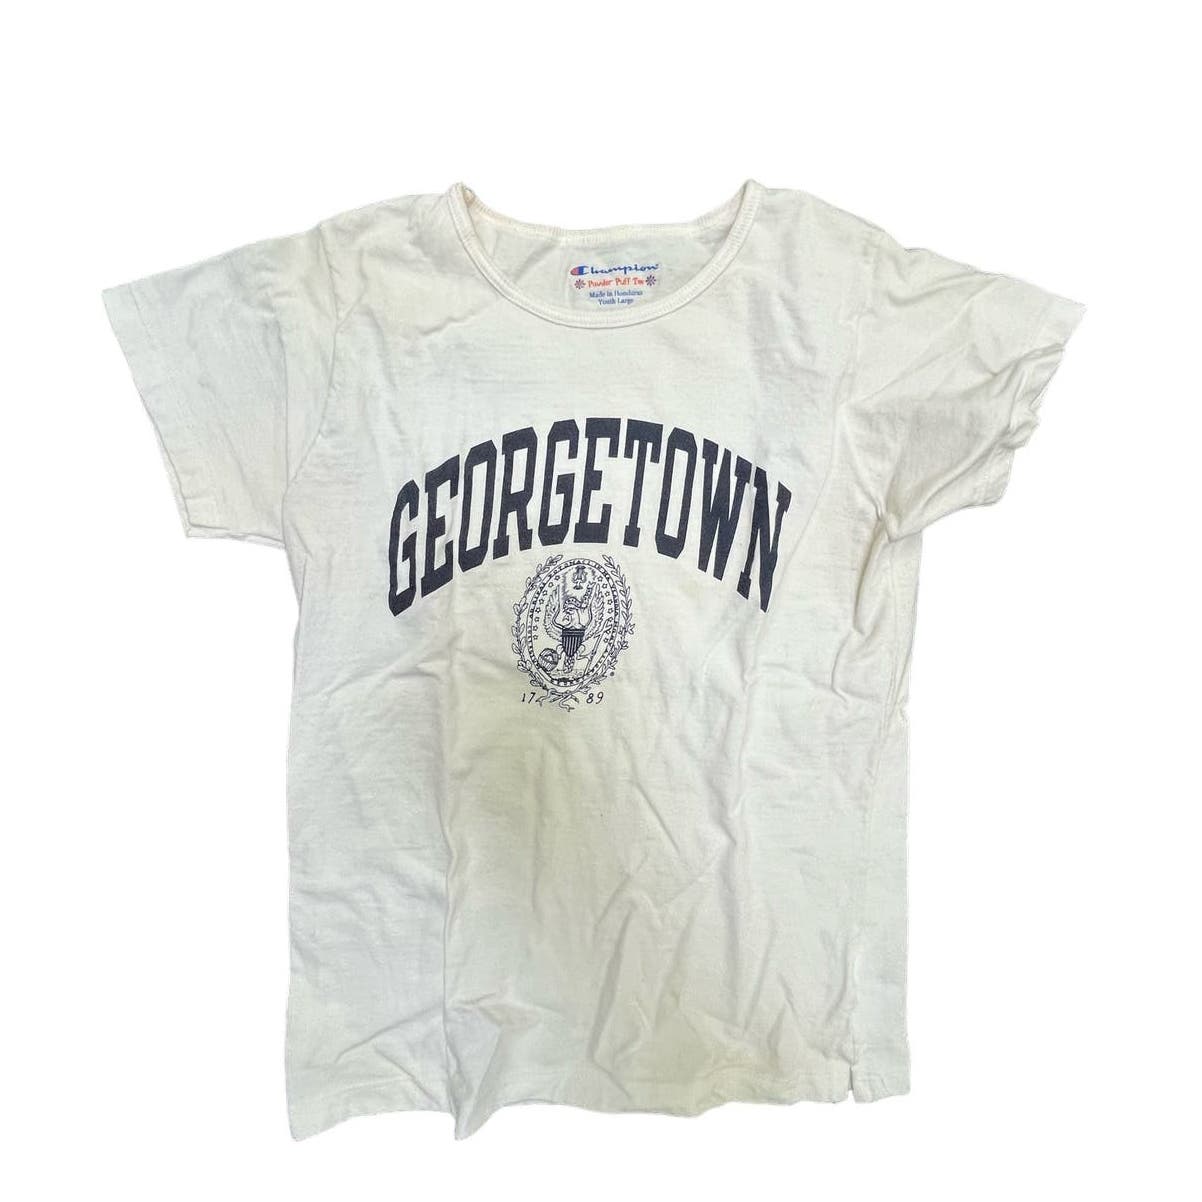 Youth Georgetown University White T-Shirt Sz Large